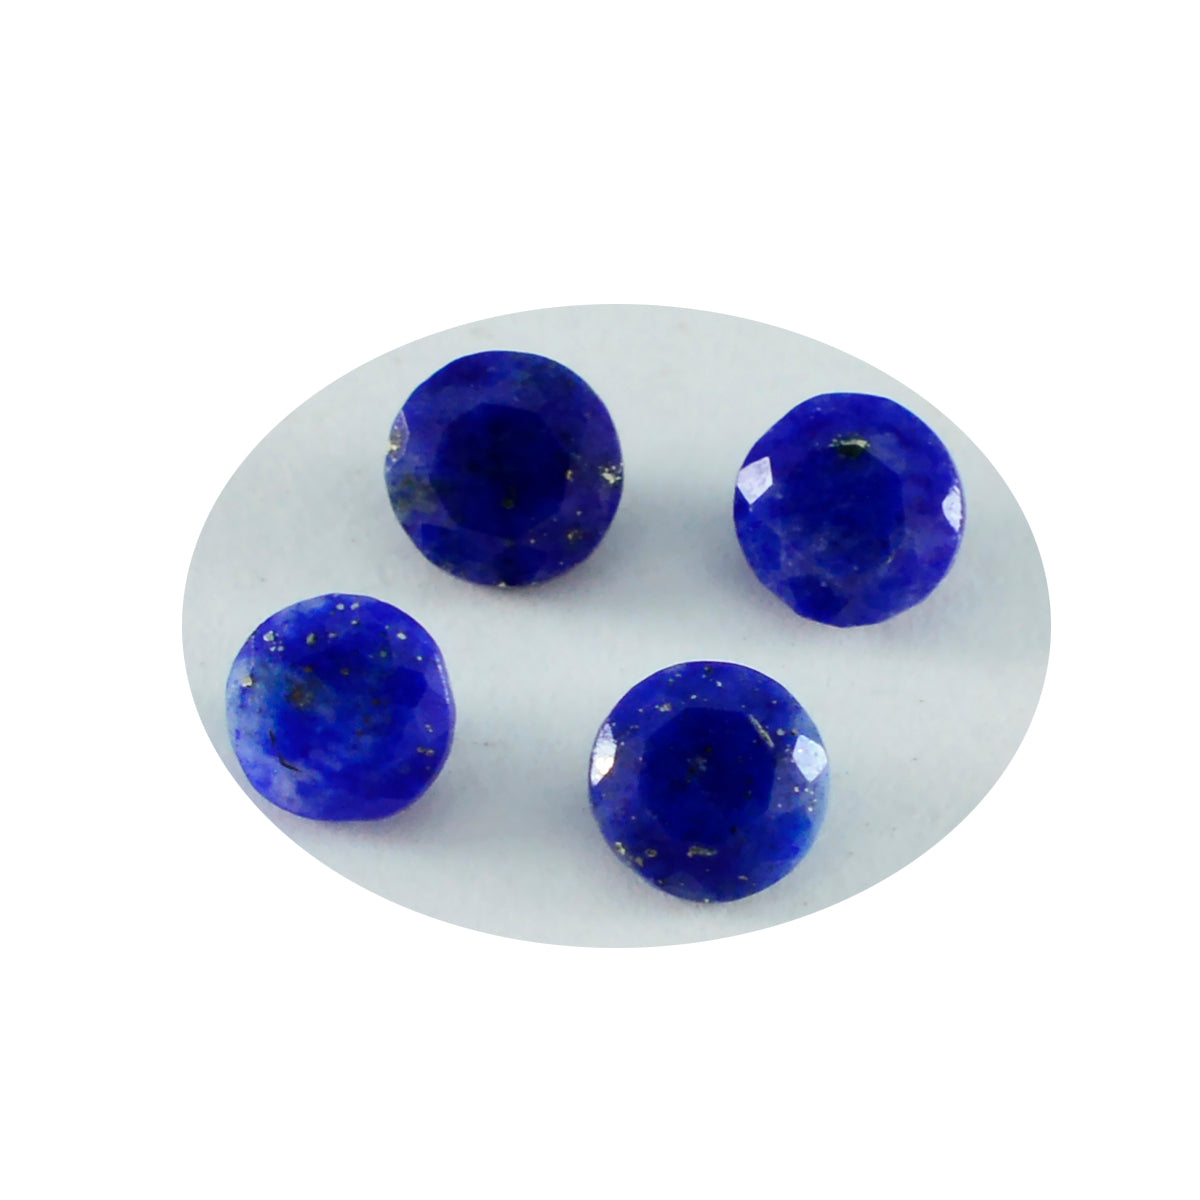 Riyogems 1PC Natuurlijke Blauwe Lapis Lazuli Facet 9x9 mm Ronde Vorm A+ Kwaliteit Losse Steen